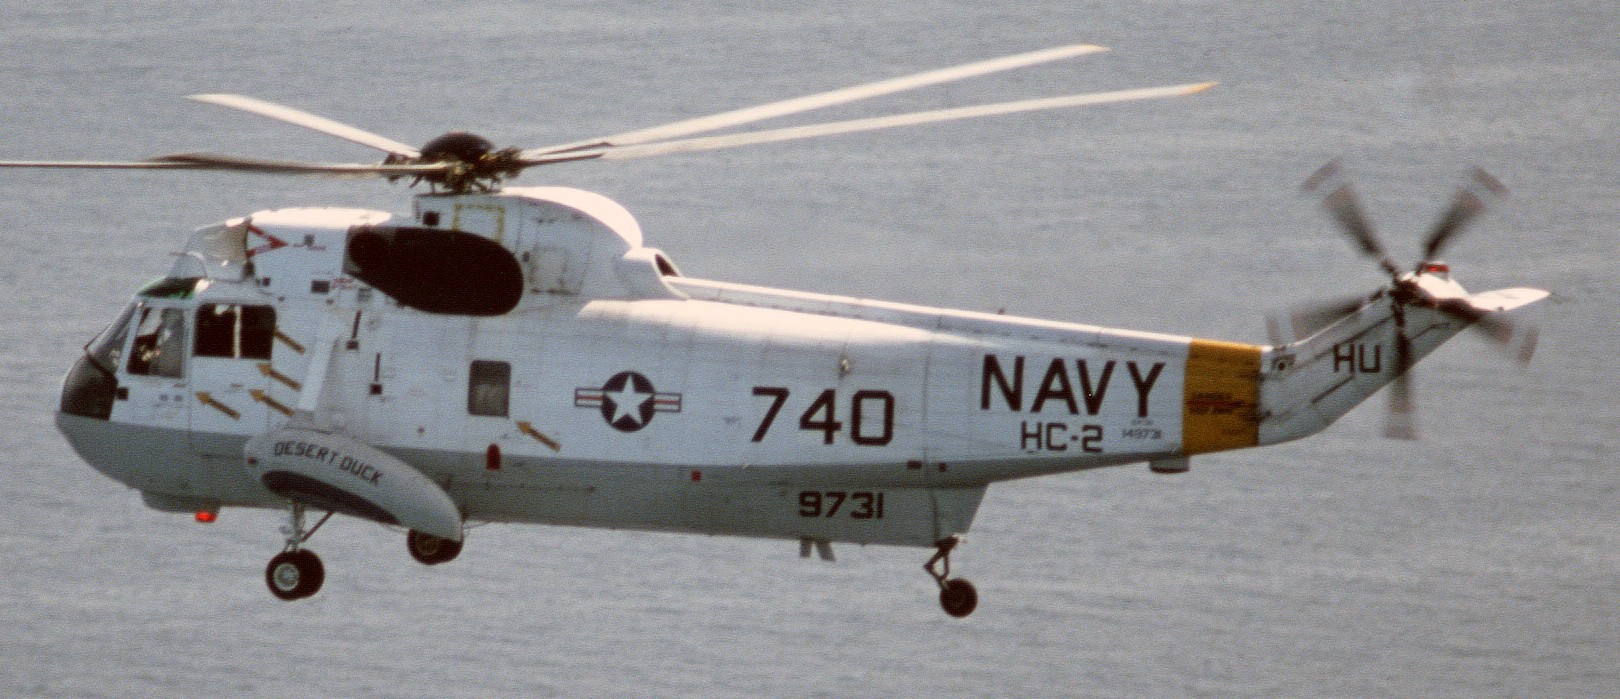 hc-2 fleet angels helicopter combat support squadron us navy sh-3g sea king 25 desert duck